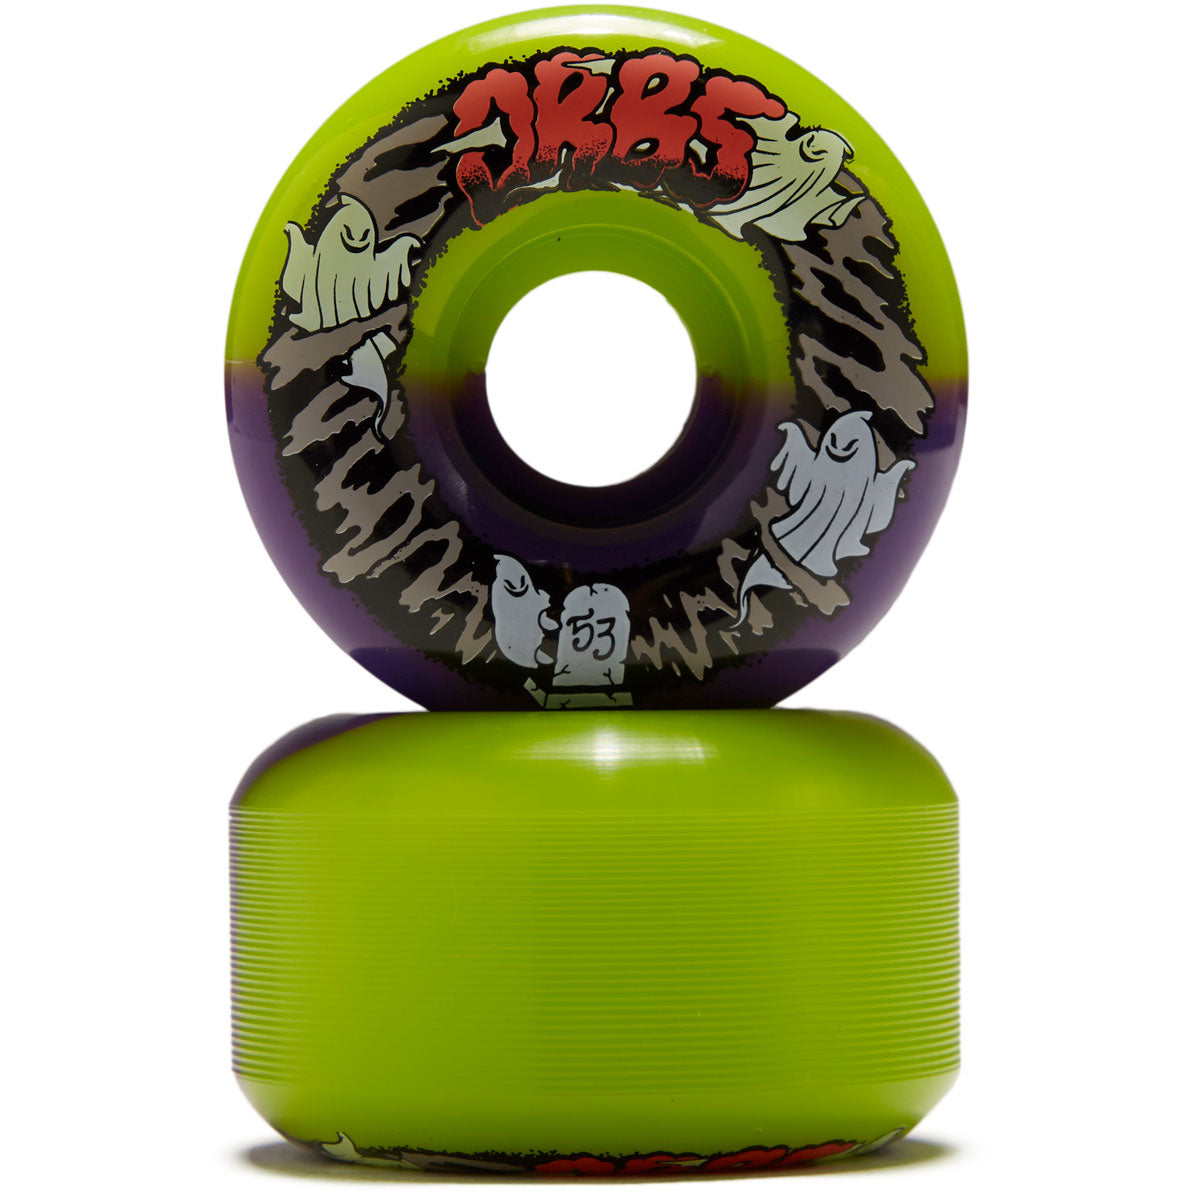 Welcome Orbs Apparitions '23 Round 99A Skateboard Wheels - Green/Purple Split - 53mm image 2